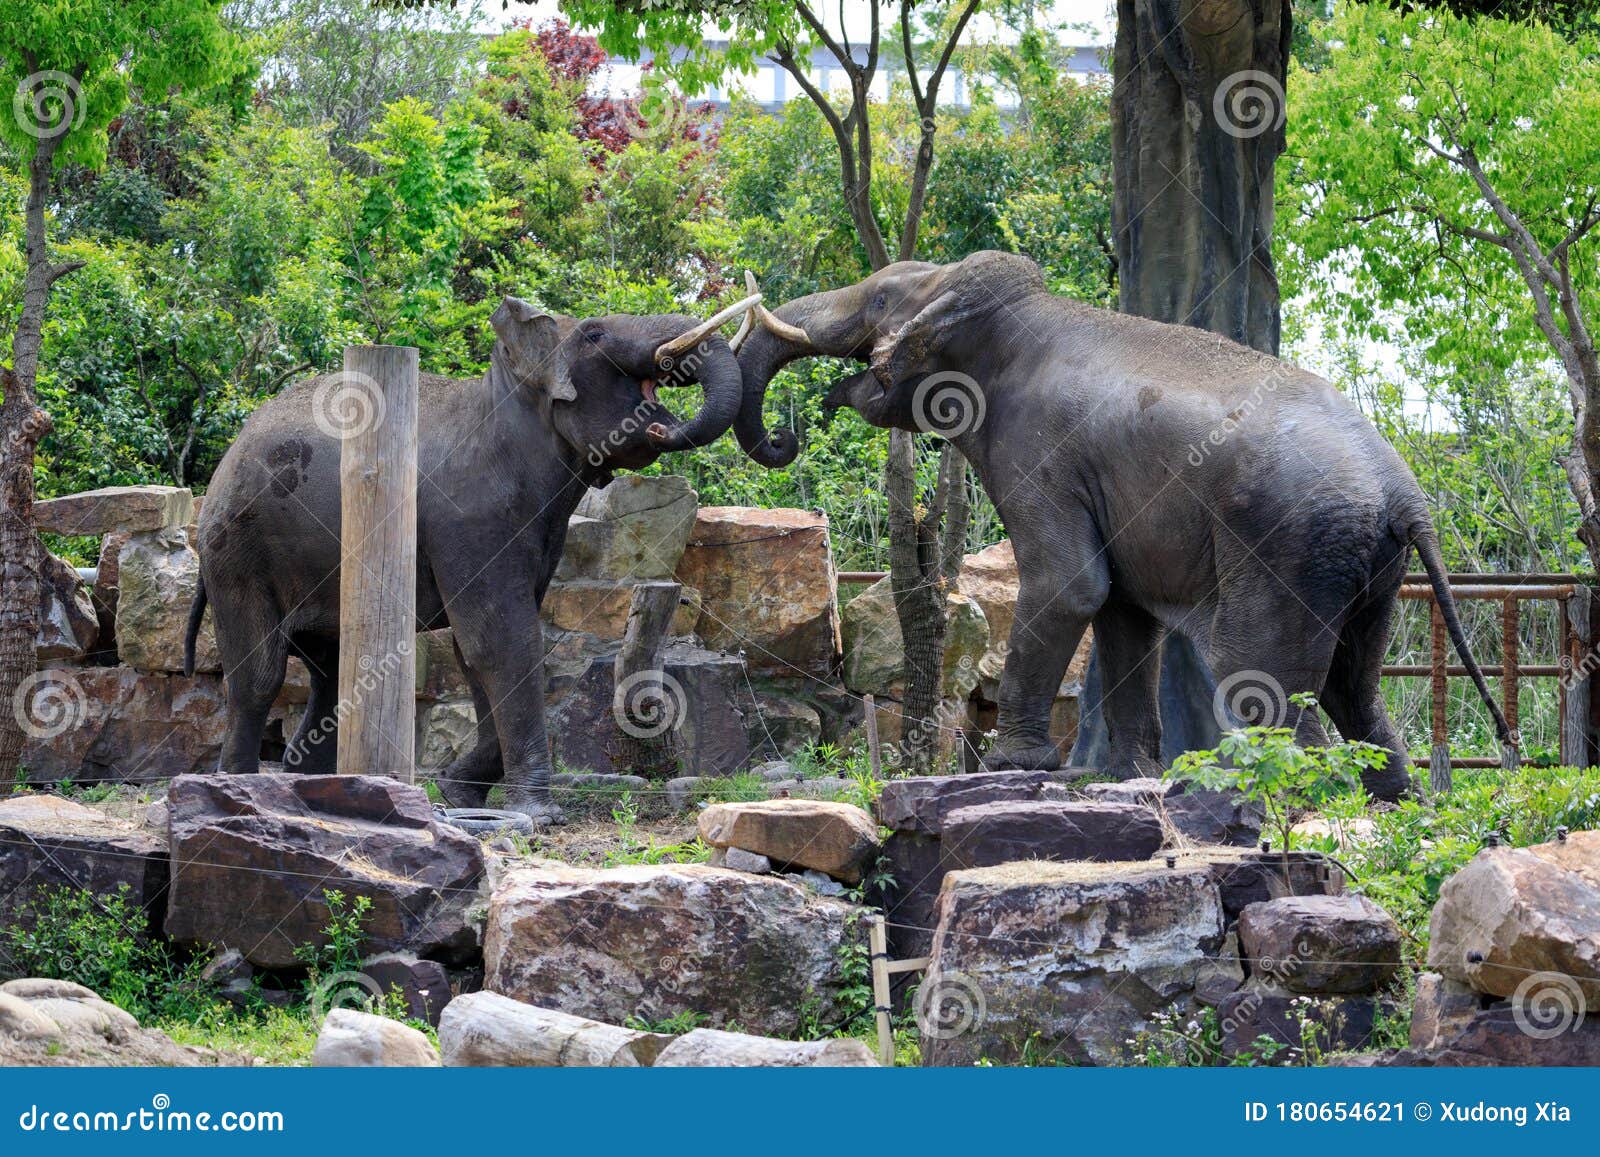 the battle of elephants